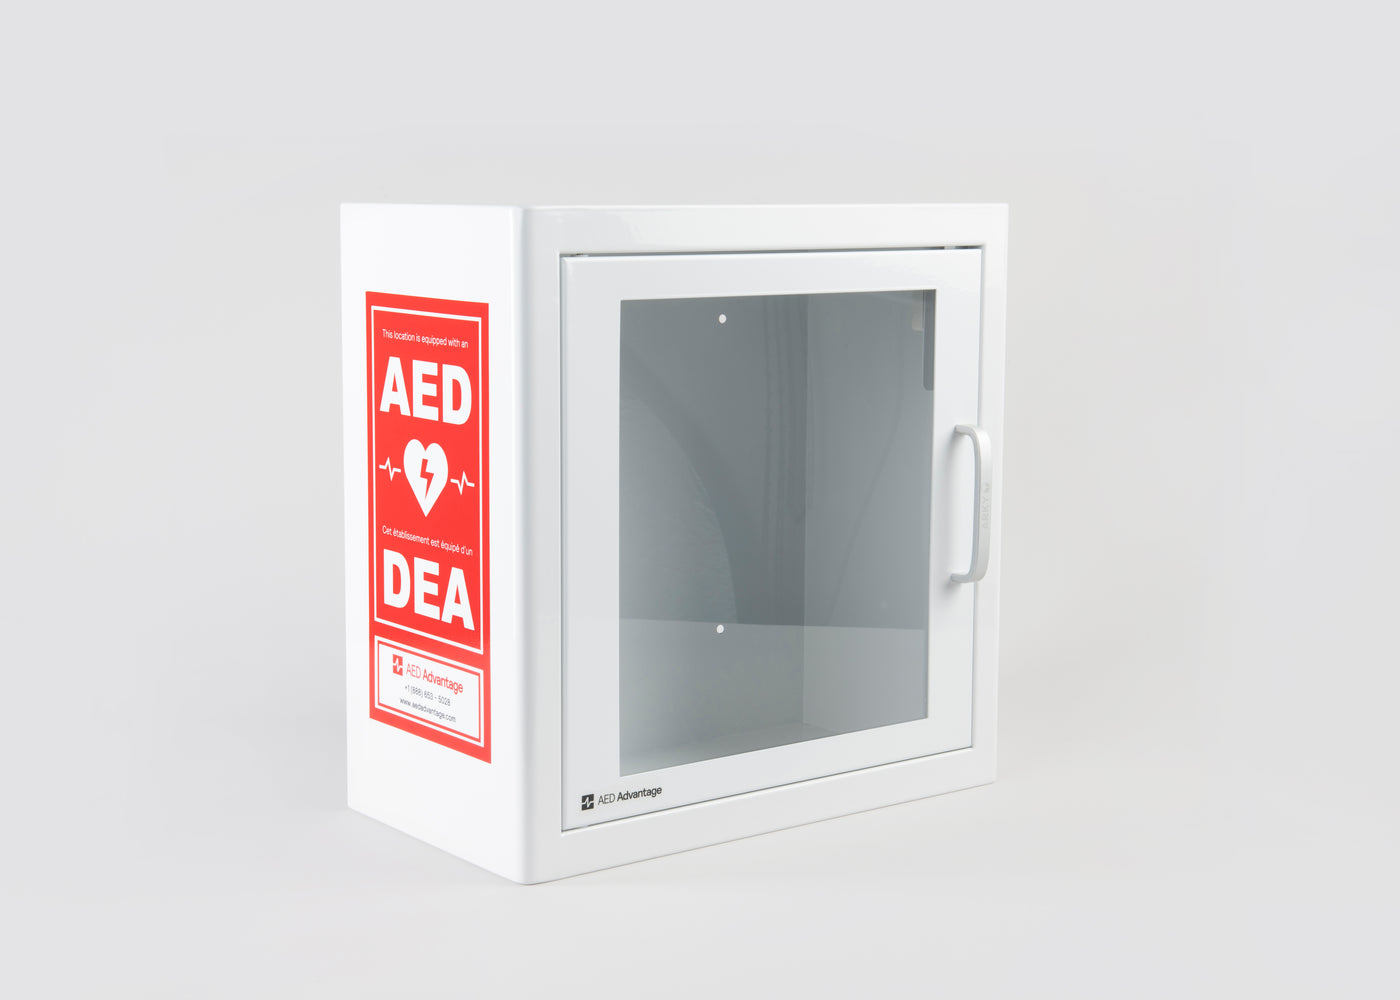 Lifeline Safe and Sound AED Bundle